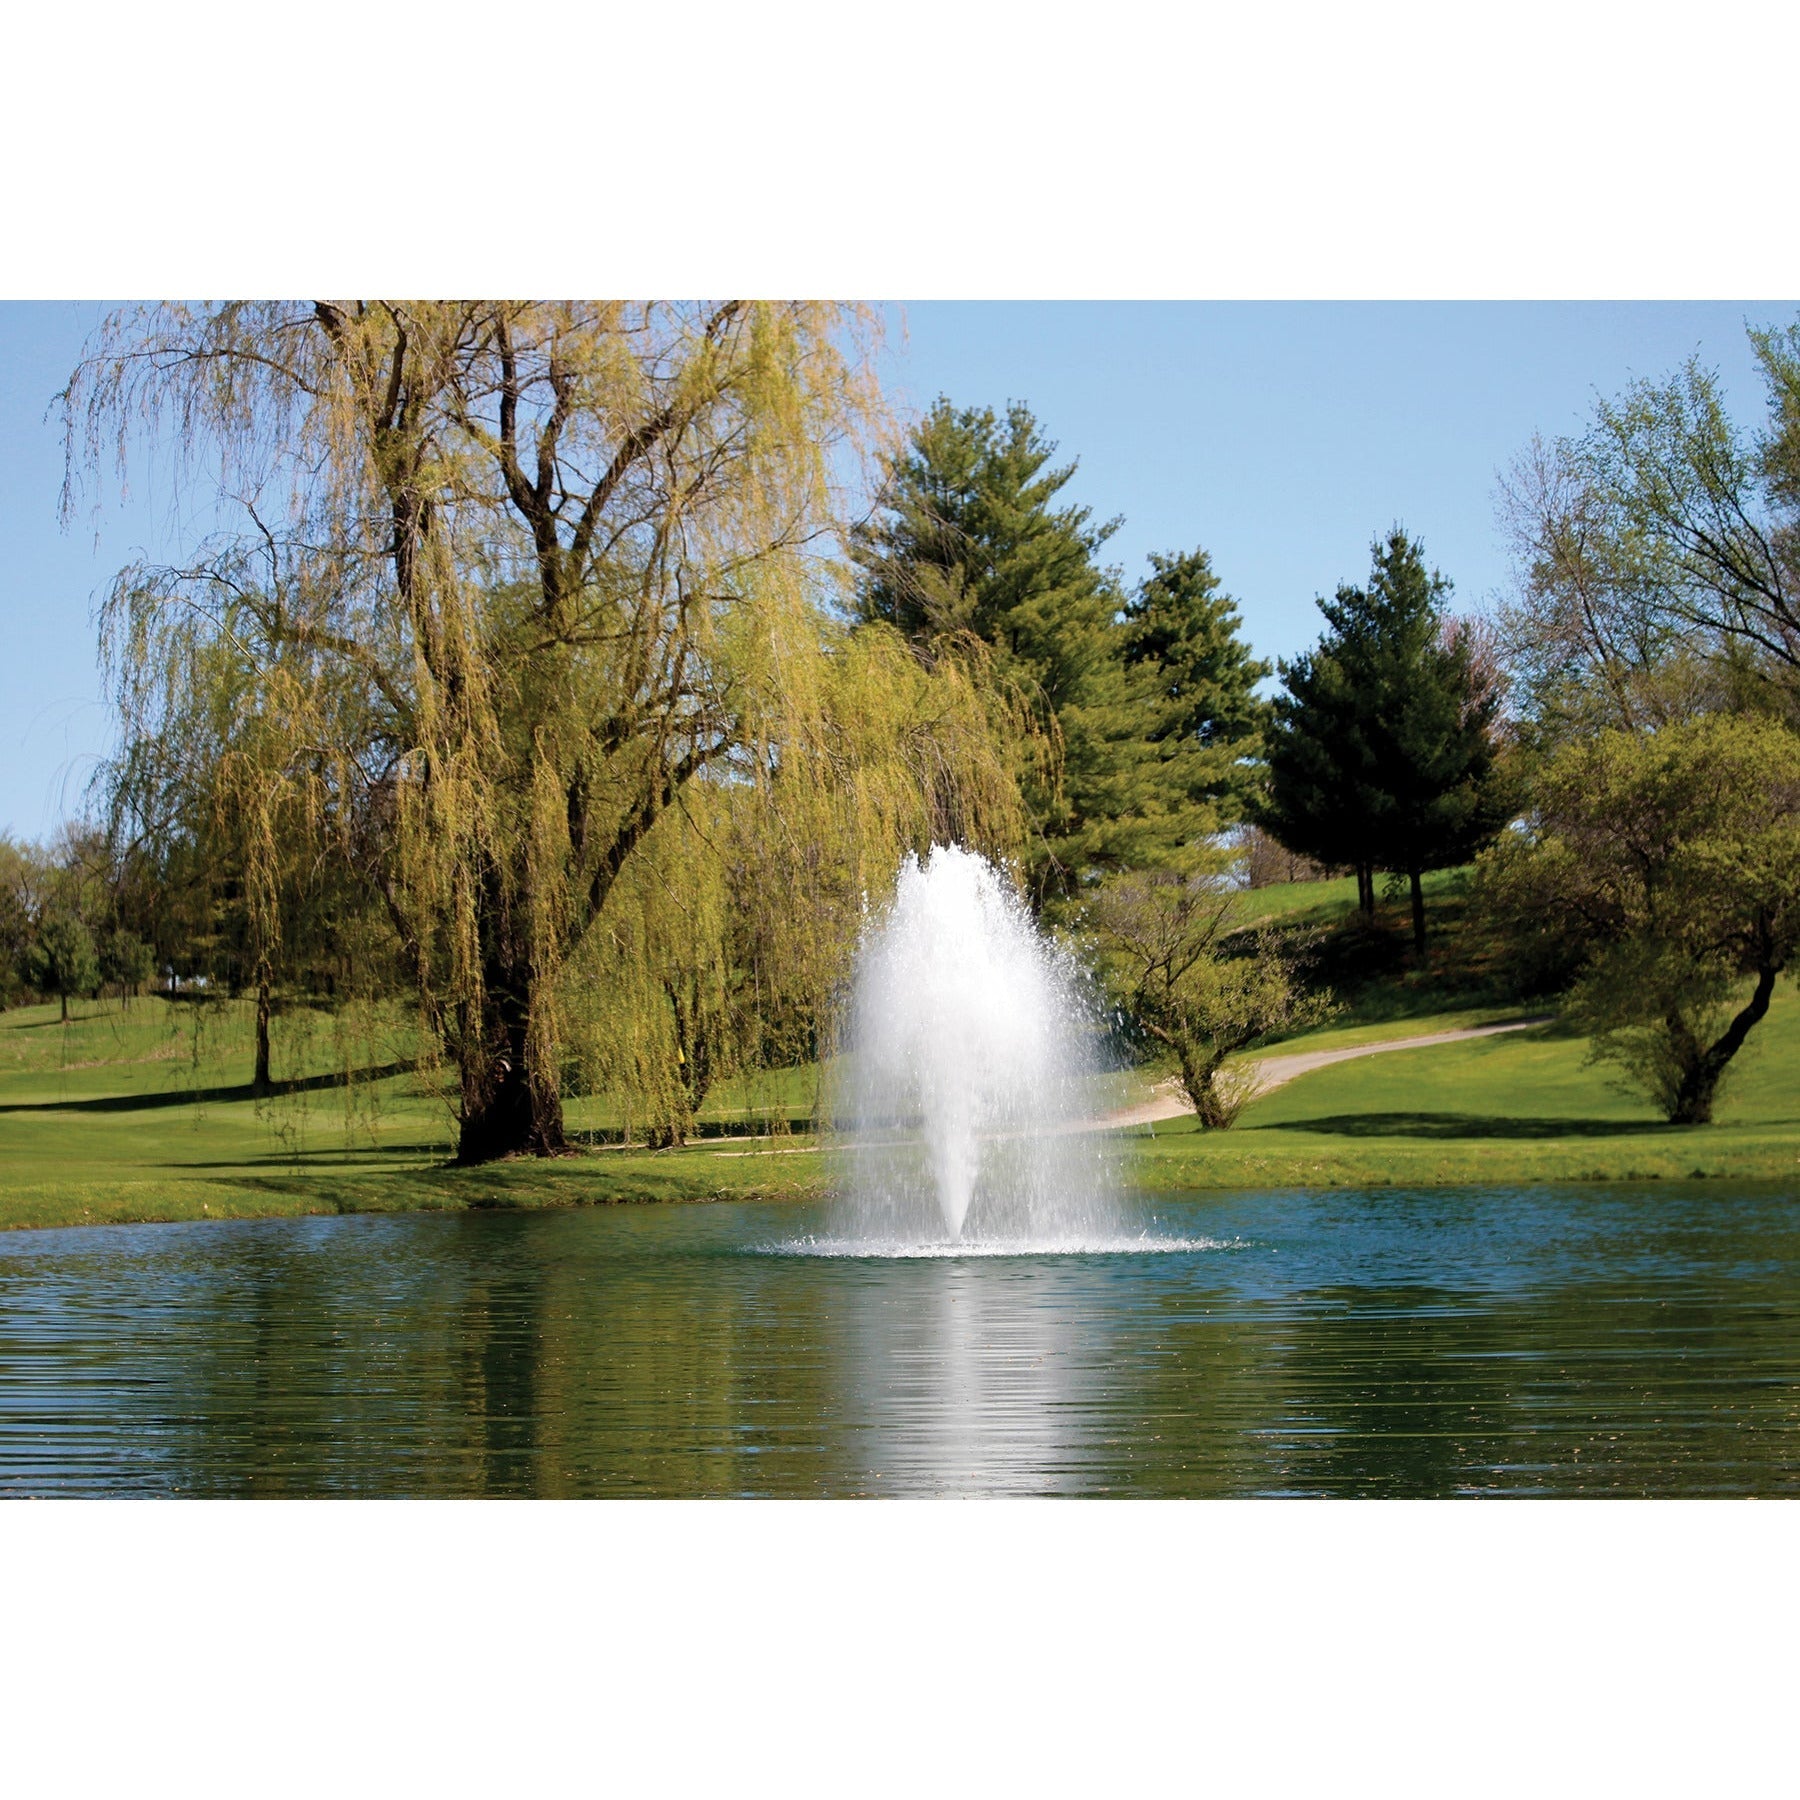 Kasco J Series Decorative Fountain 2 HP - American Pond Supplies Kasco Marine Pond Fountains Pond Fountains